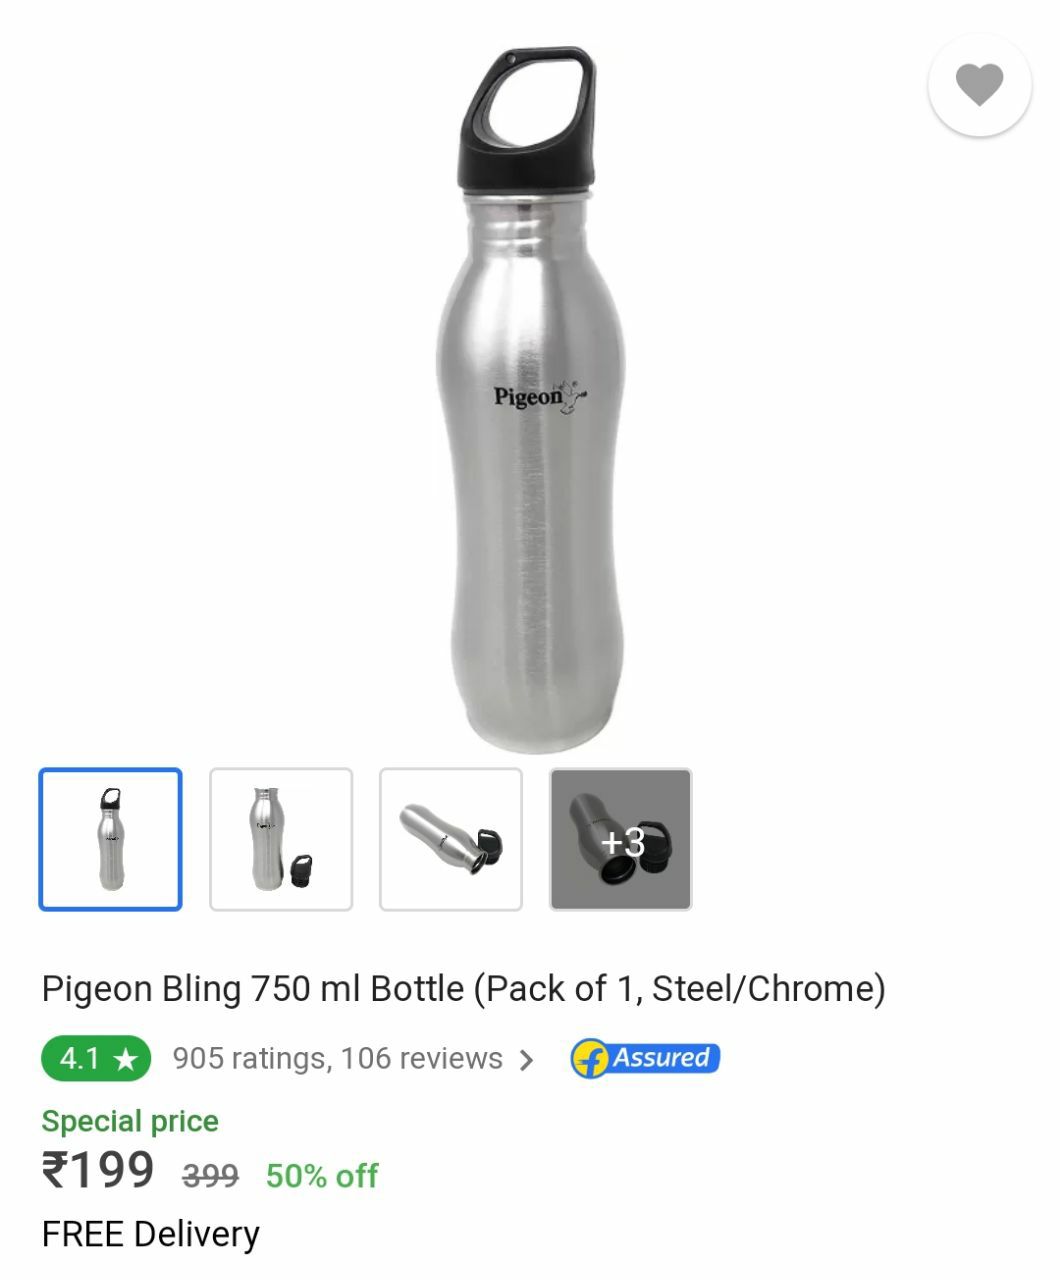 [Best Deal] Pigeon Steel 750ml Bottle @ Just Rs.199 (Worth ₹400)